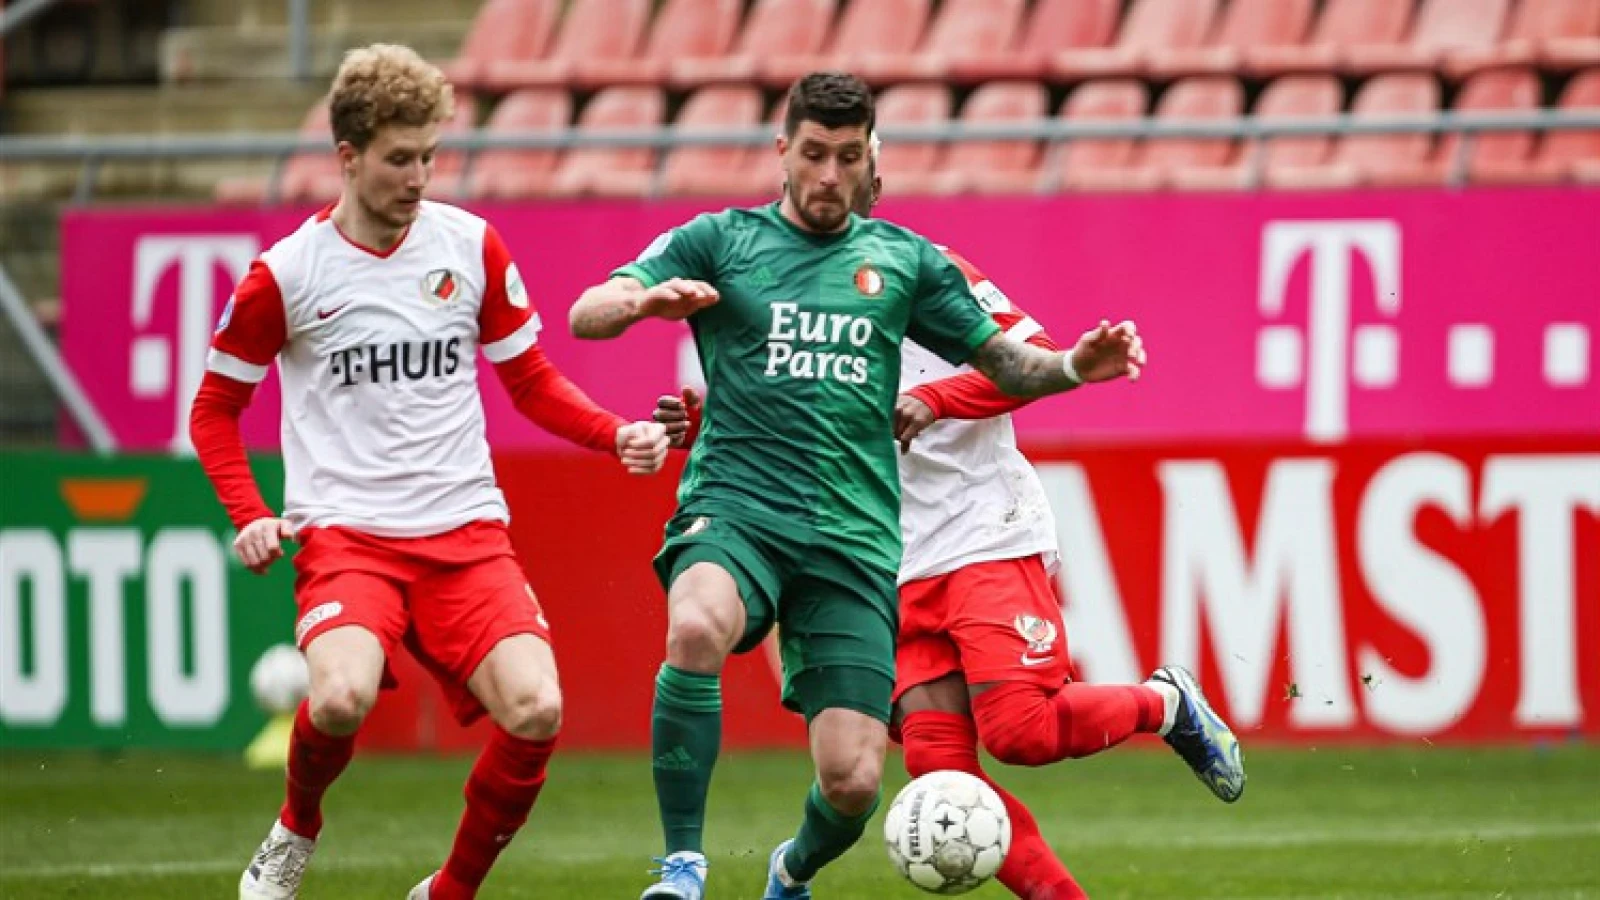 PLAY-OFFS | Feyenoord speelt tegen FC Utrecht in finale play-offs om Europees voetbal